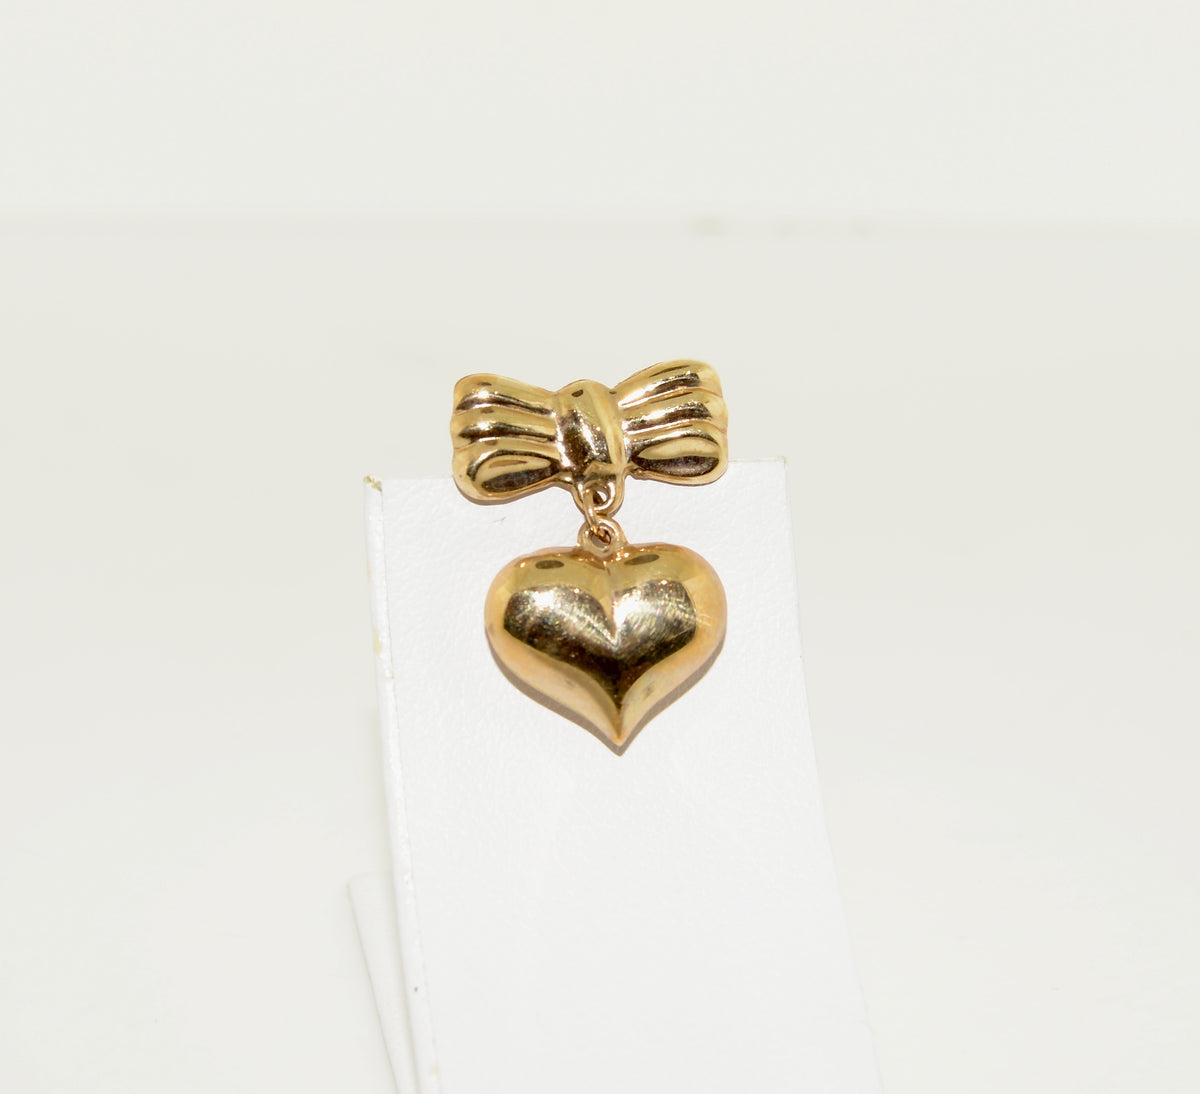 14 Karat Yellow Gold Ribbon Brooch with Dangling Heart